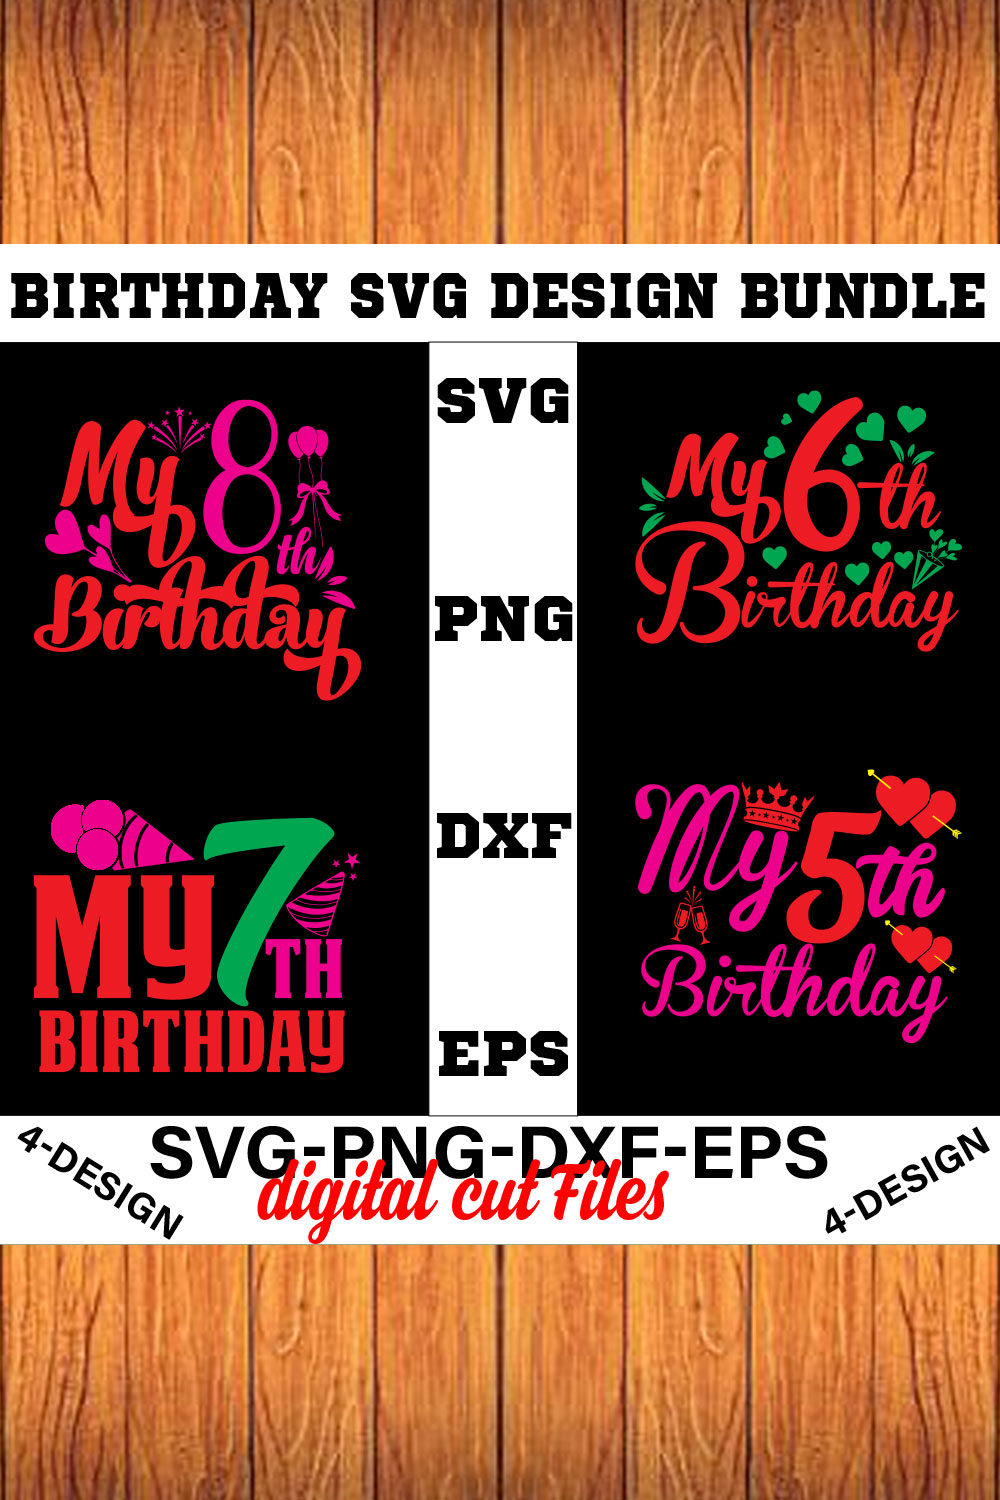 birthday svg design bundle Happy birthday svg bundle hand lettered birthday svg birthday party svg Volume-02 pinterest preview image.